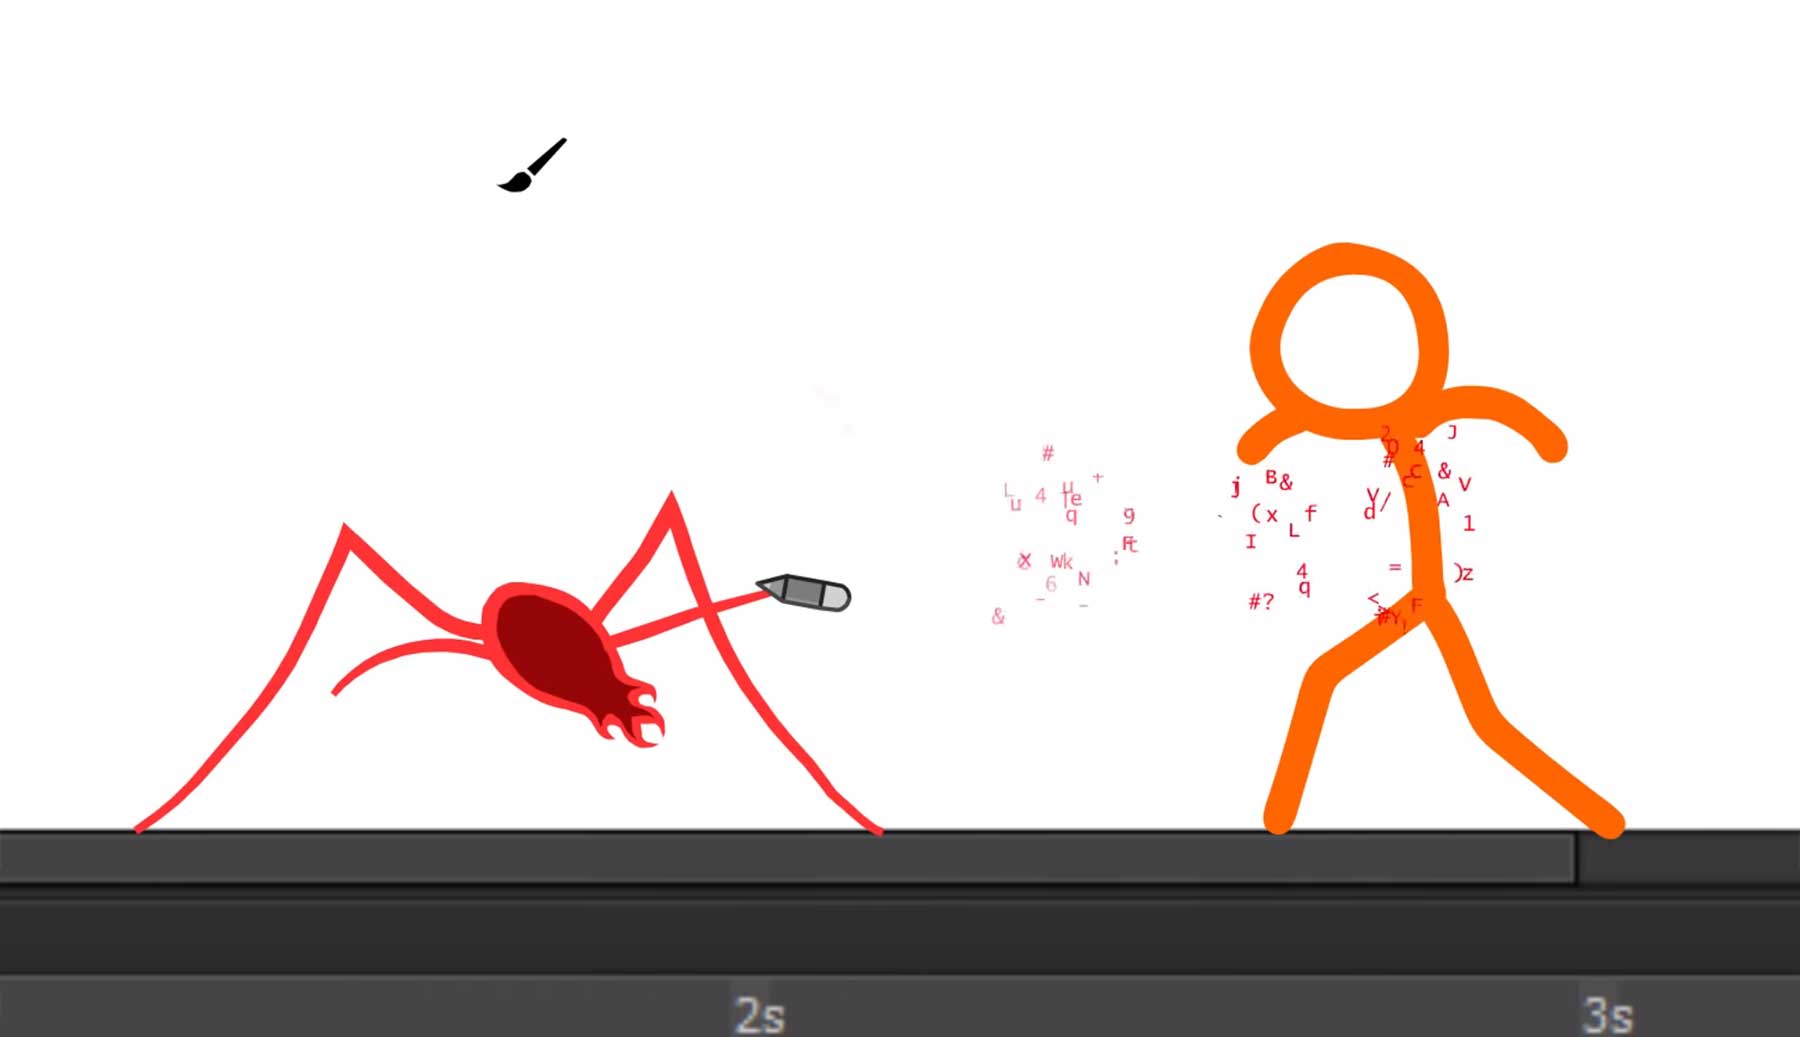 Animator vs. Animation: The Virus